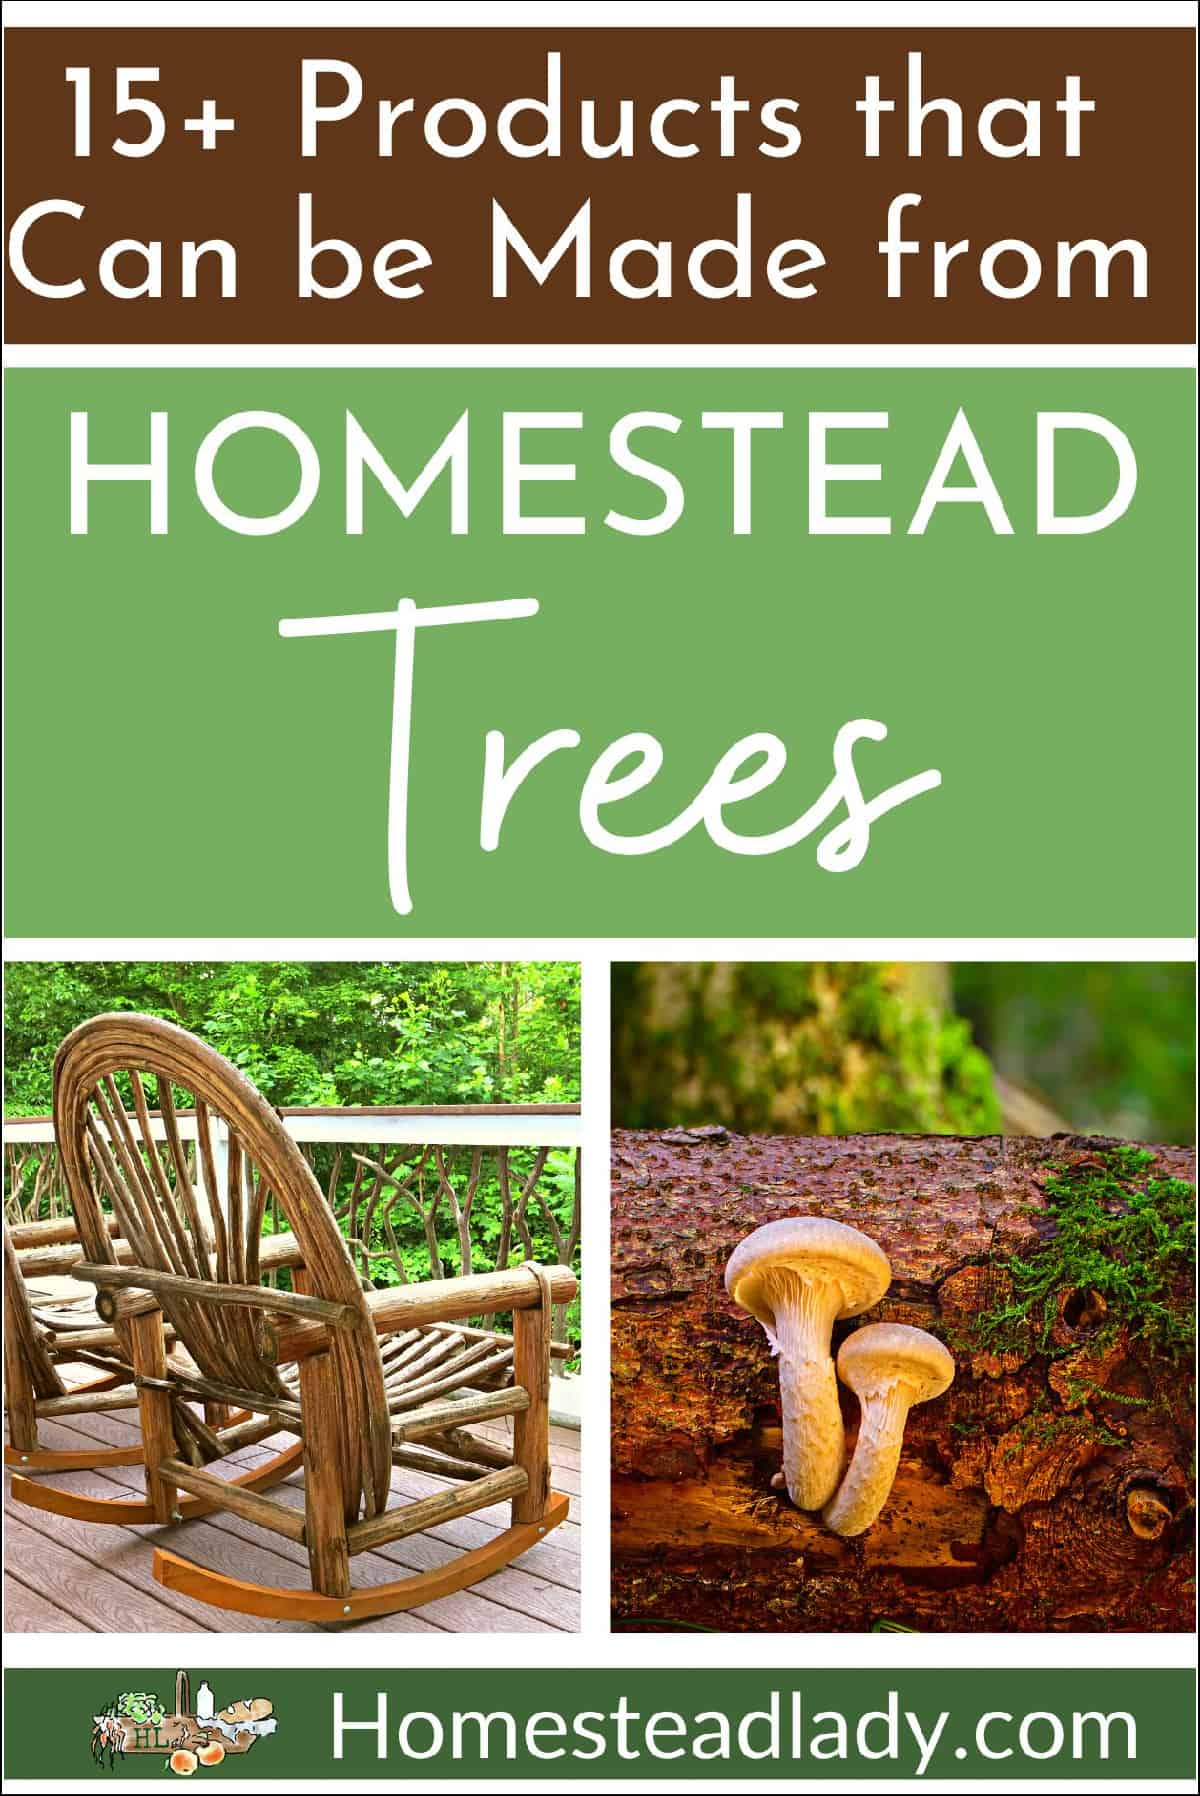 trees, coppice wood rocking chair, mushroom log